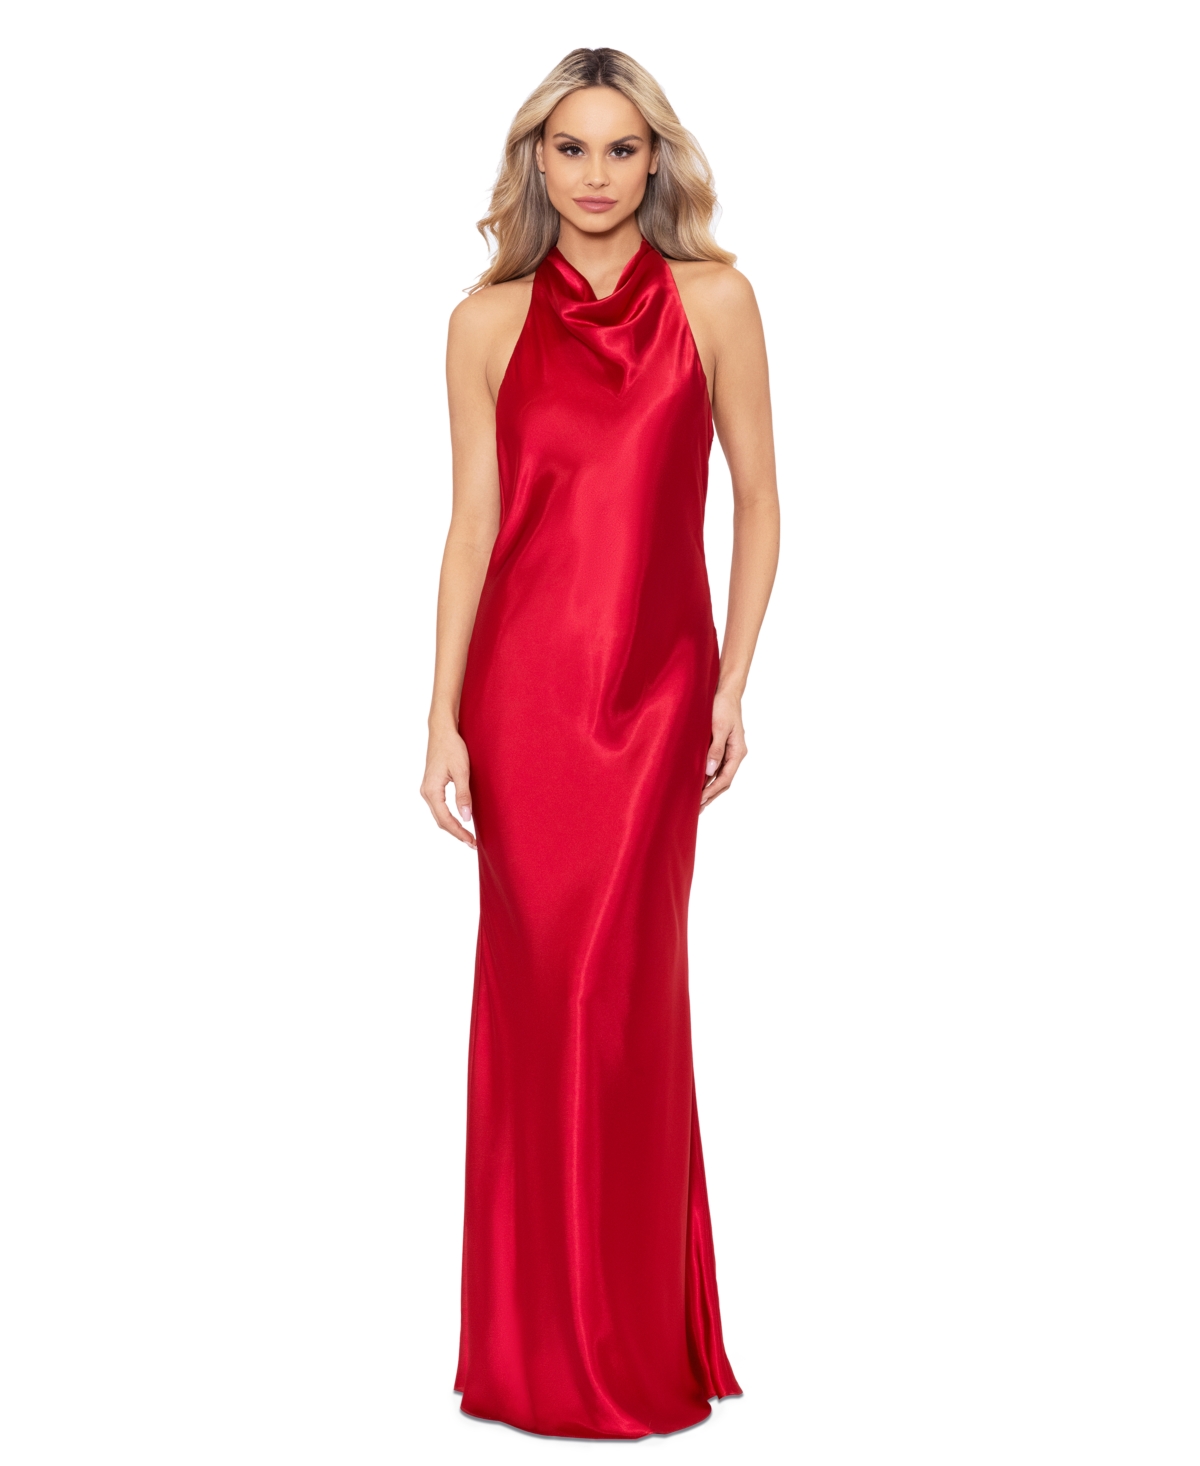 Women's Halter-Neck Sleeveless Satin Gown - Red